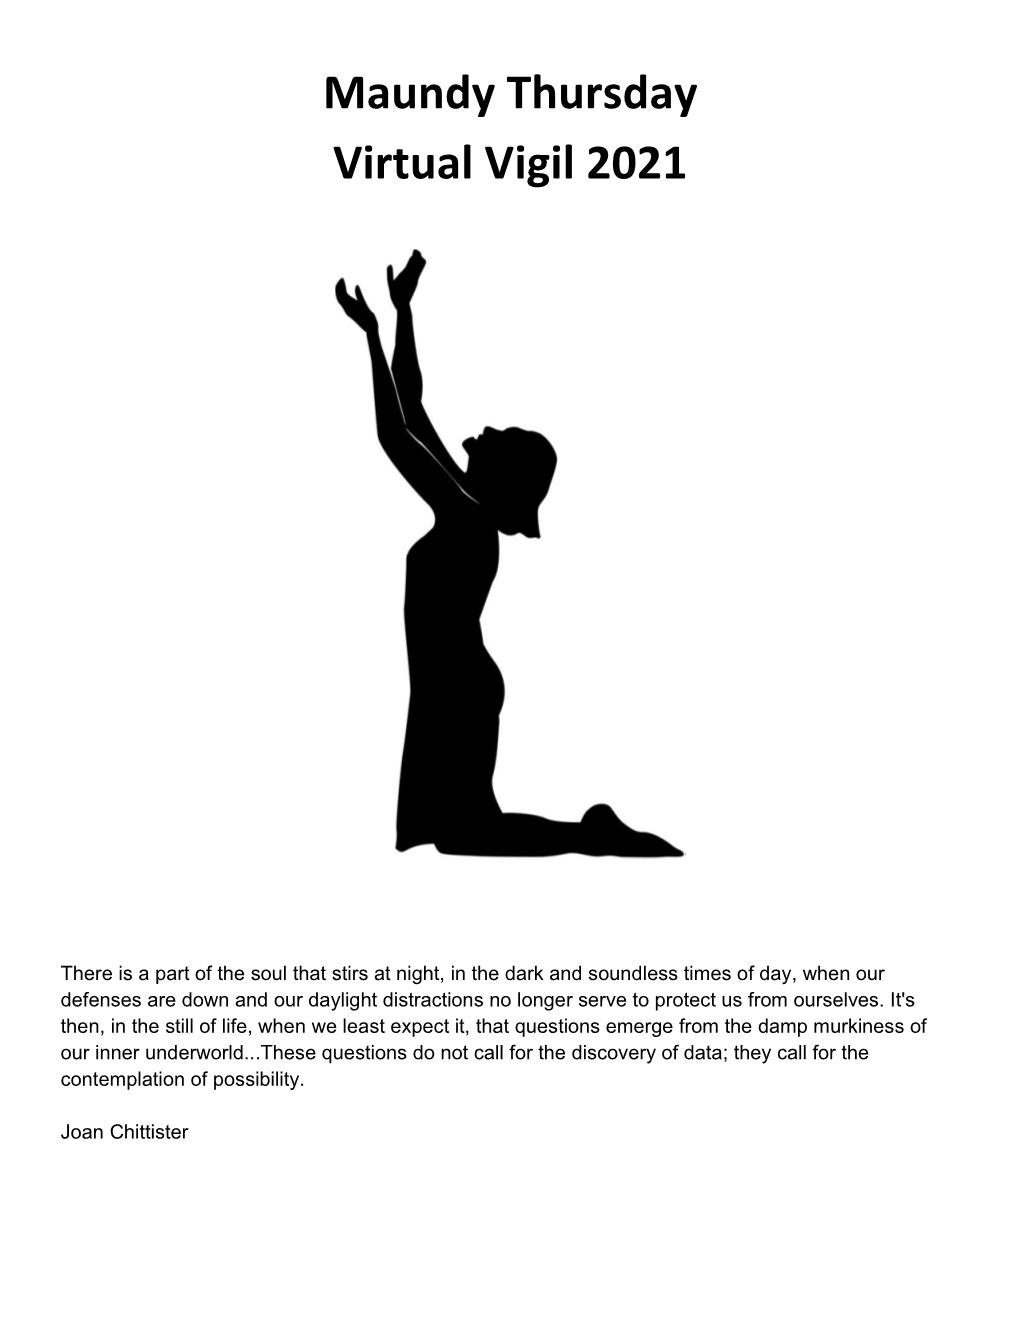 Maundy Thursday Virtual Vigil 2021